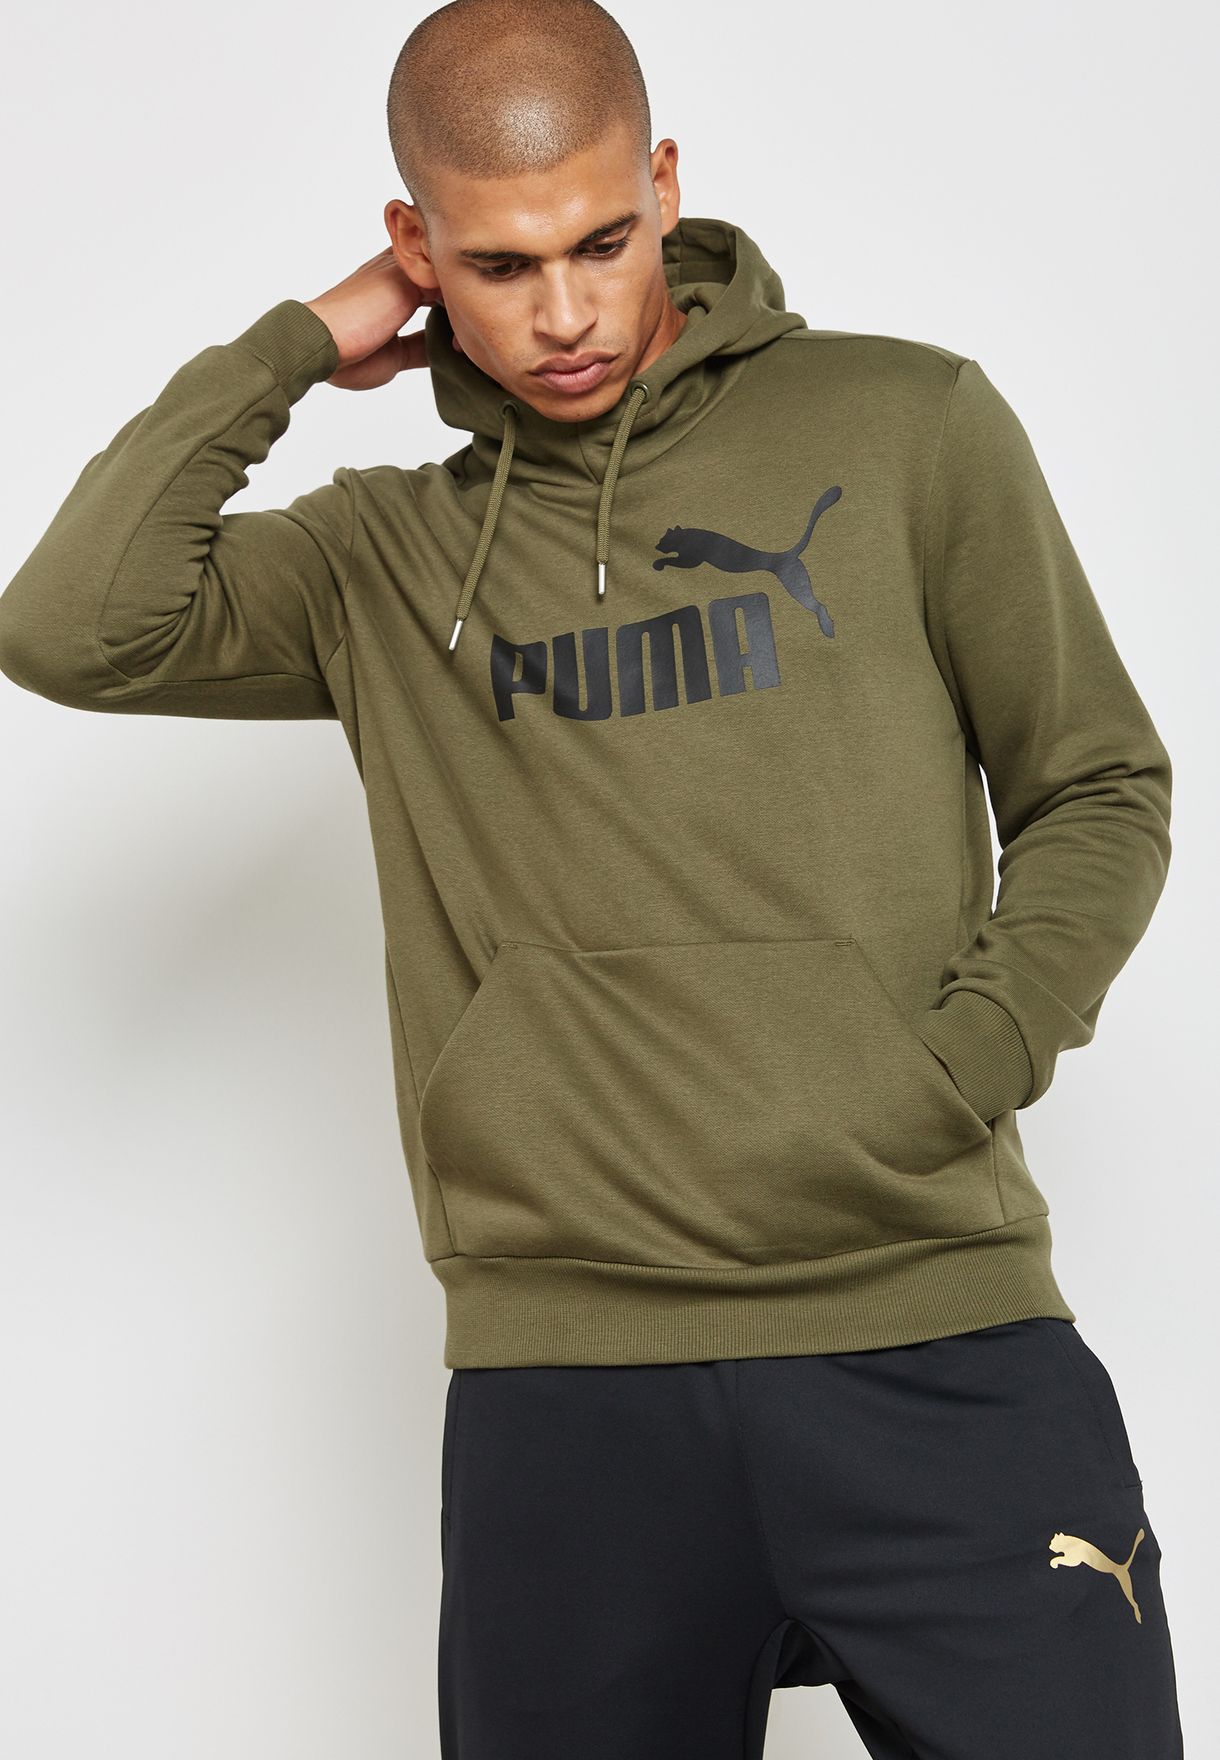 green puma hoodie mens